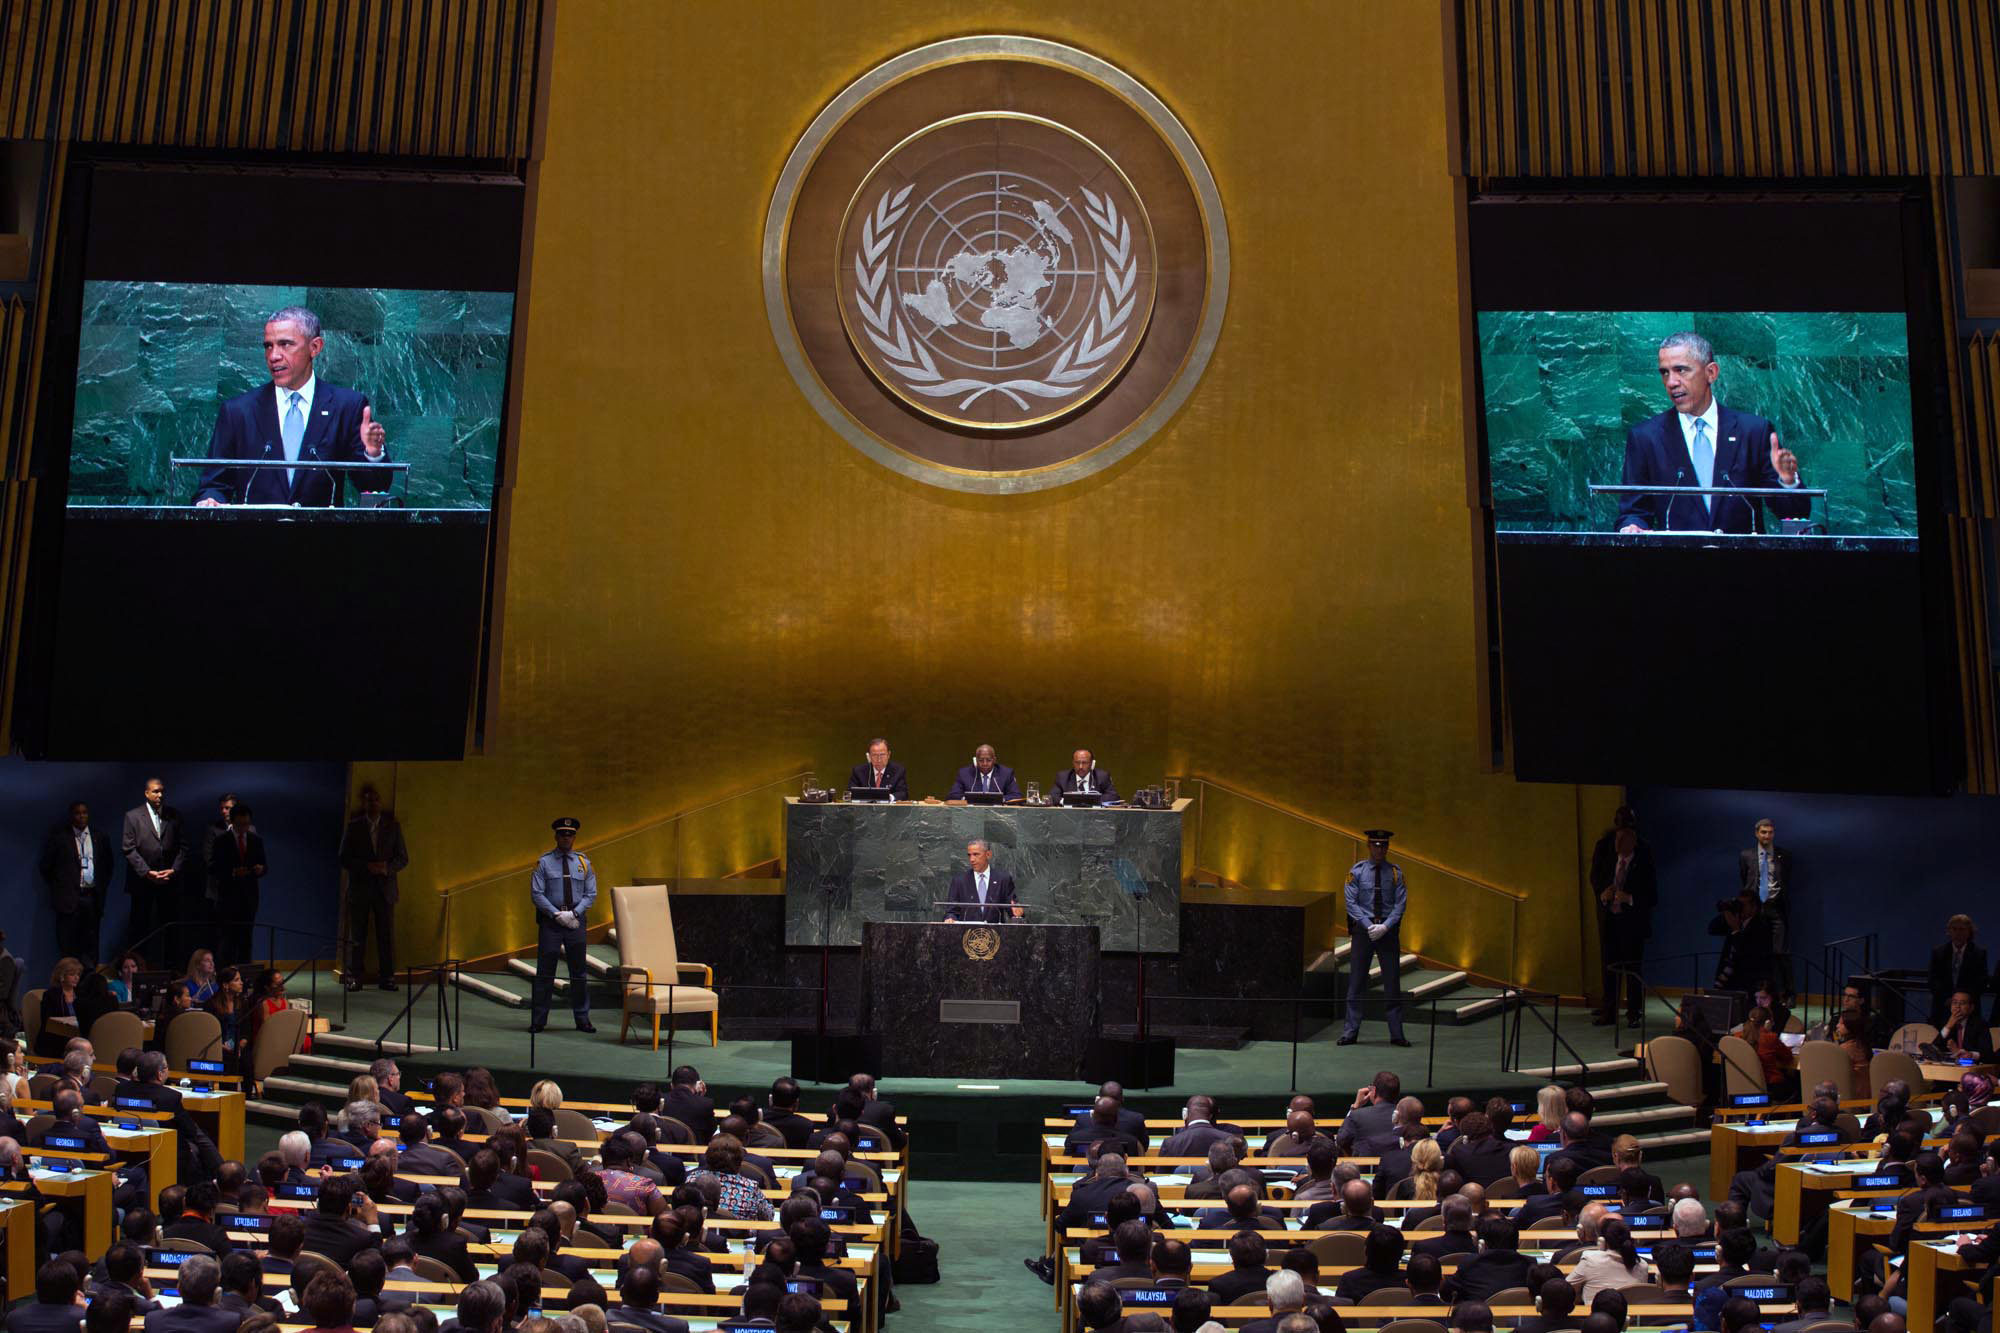 President Barack Obama addresses the United Nations General Assembly in New York